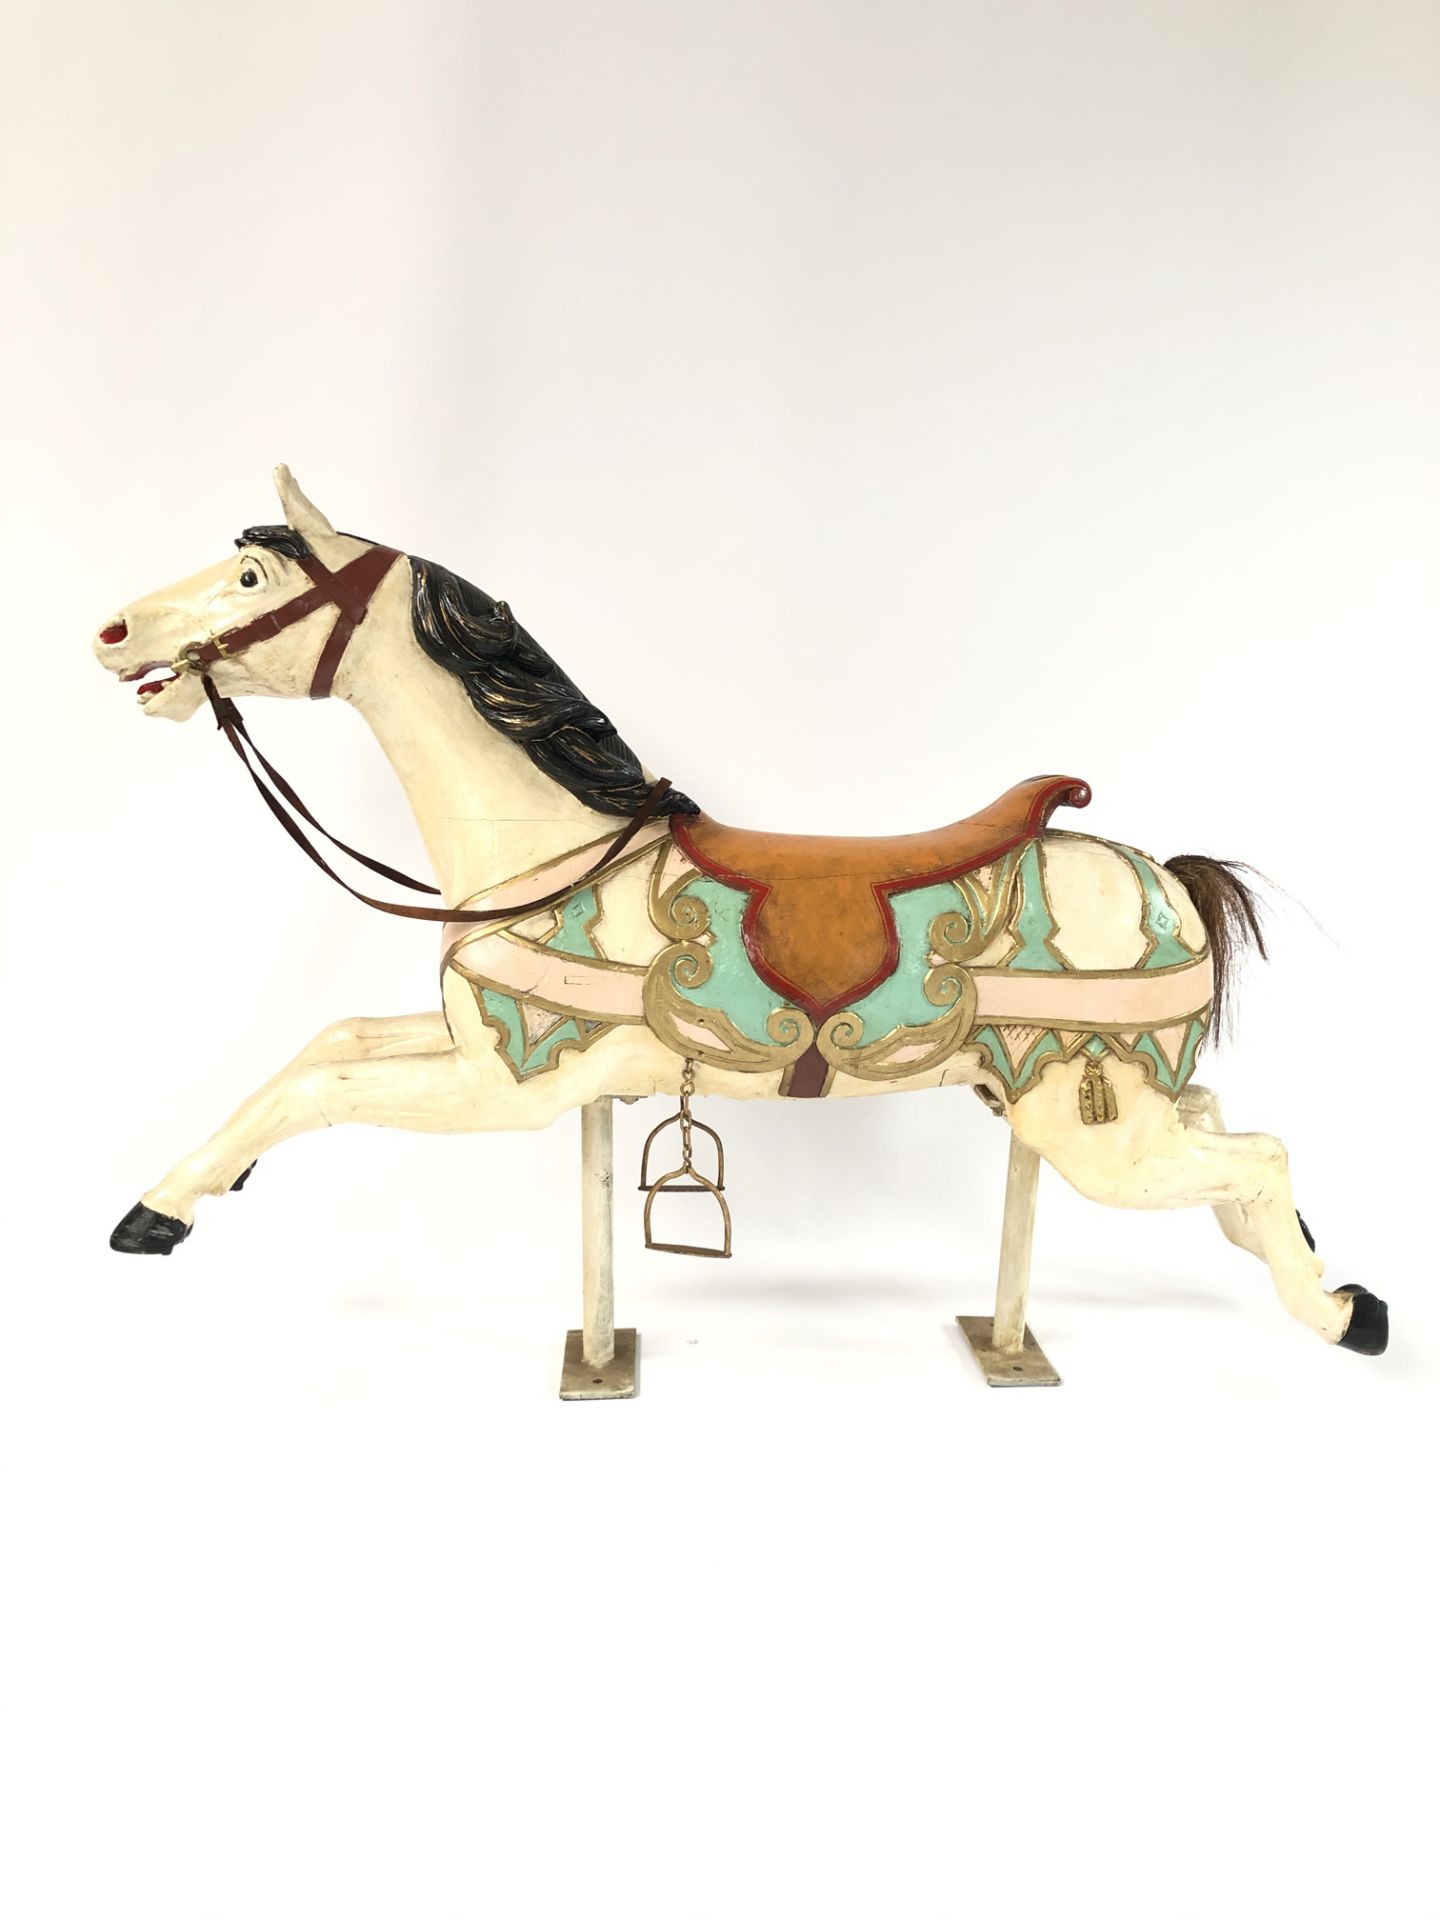 Heyn Carousel Horse ca. 1910 - Image 4 of 4